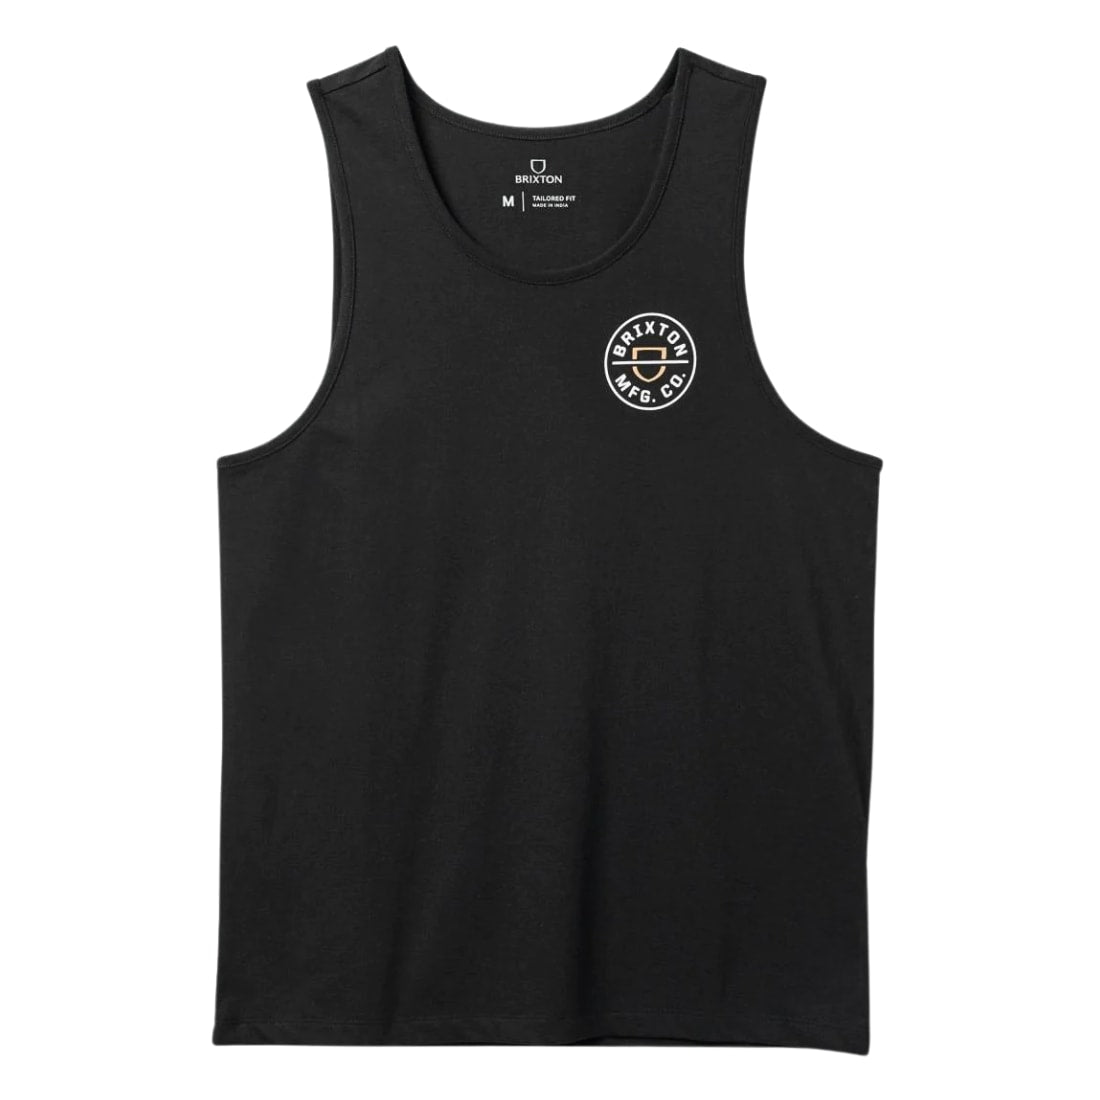 Brixton Crest Tank Top Vest - Black/Apricot Crush/White - Mens Skate Brand Vest/Tank Top by Brixton